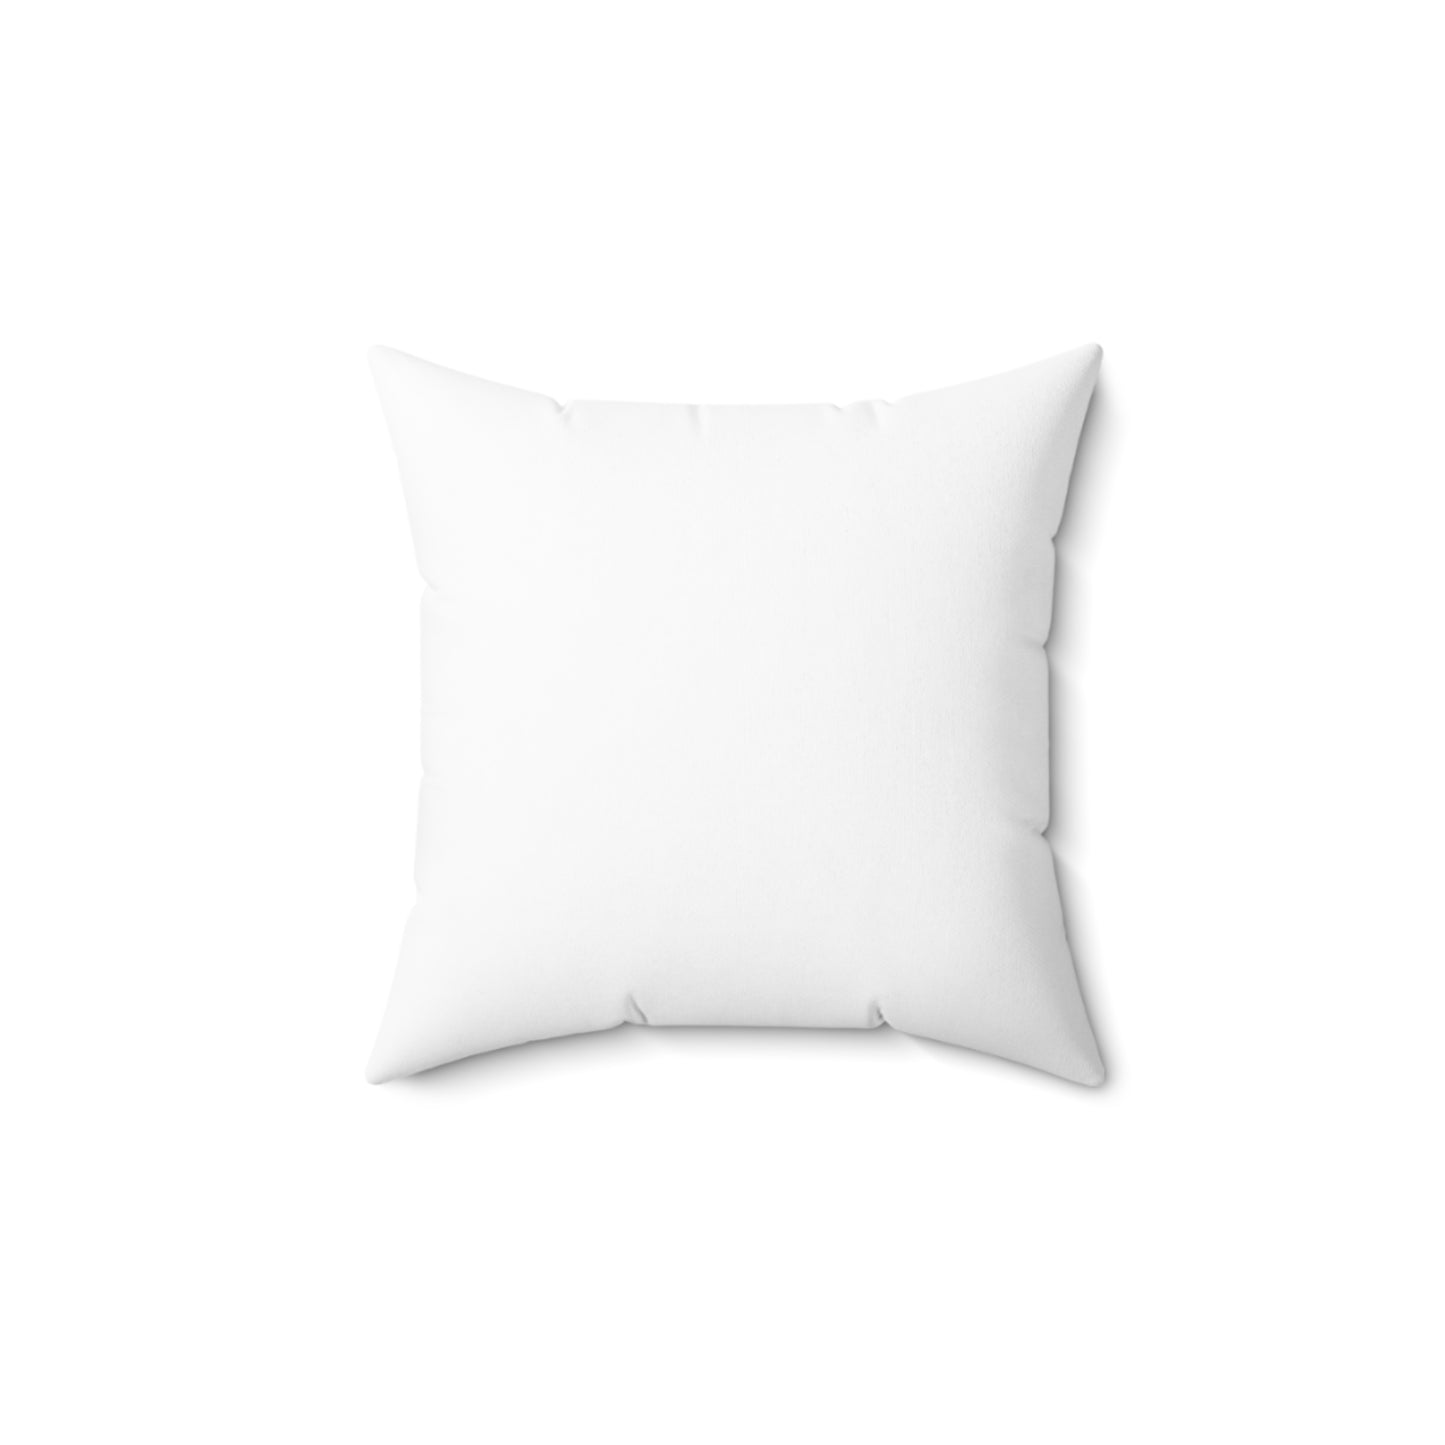 Best friend pillow | Spun Polyester Square Pillow